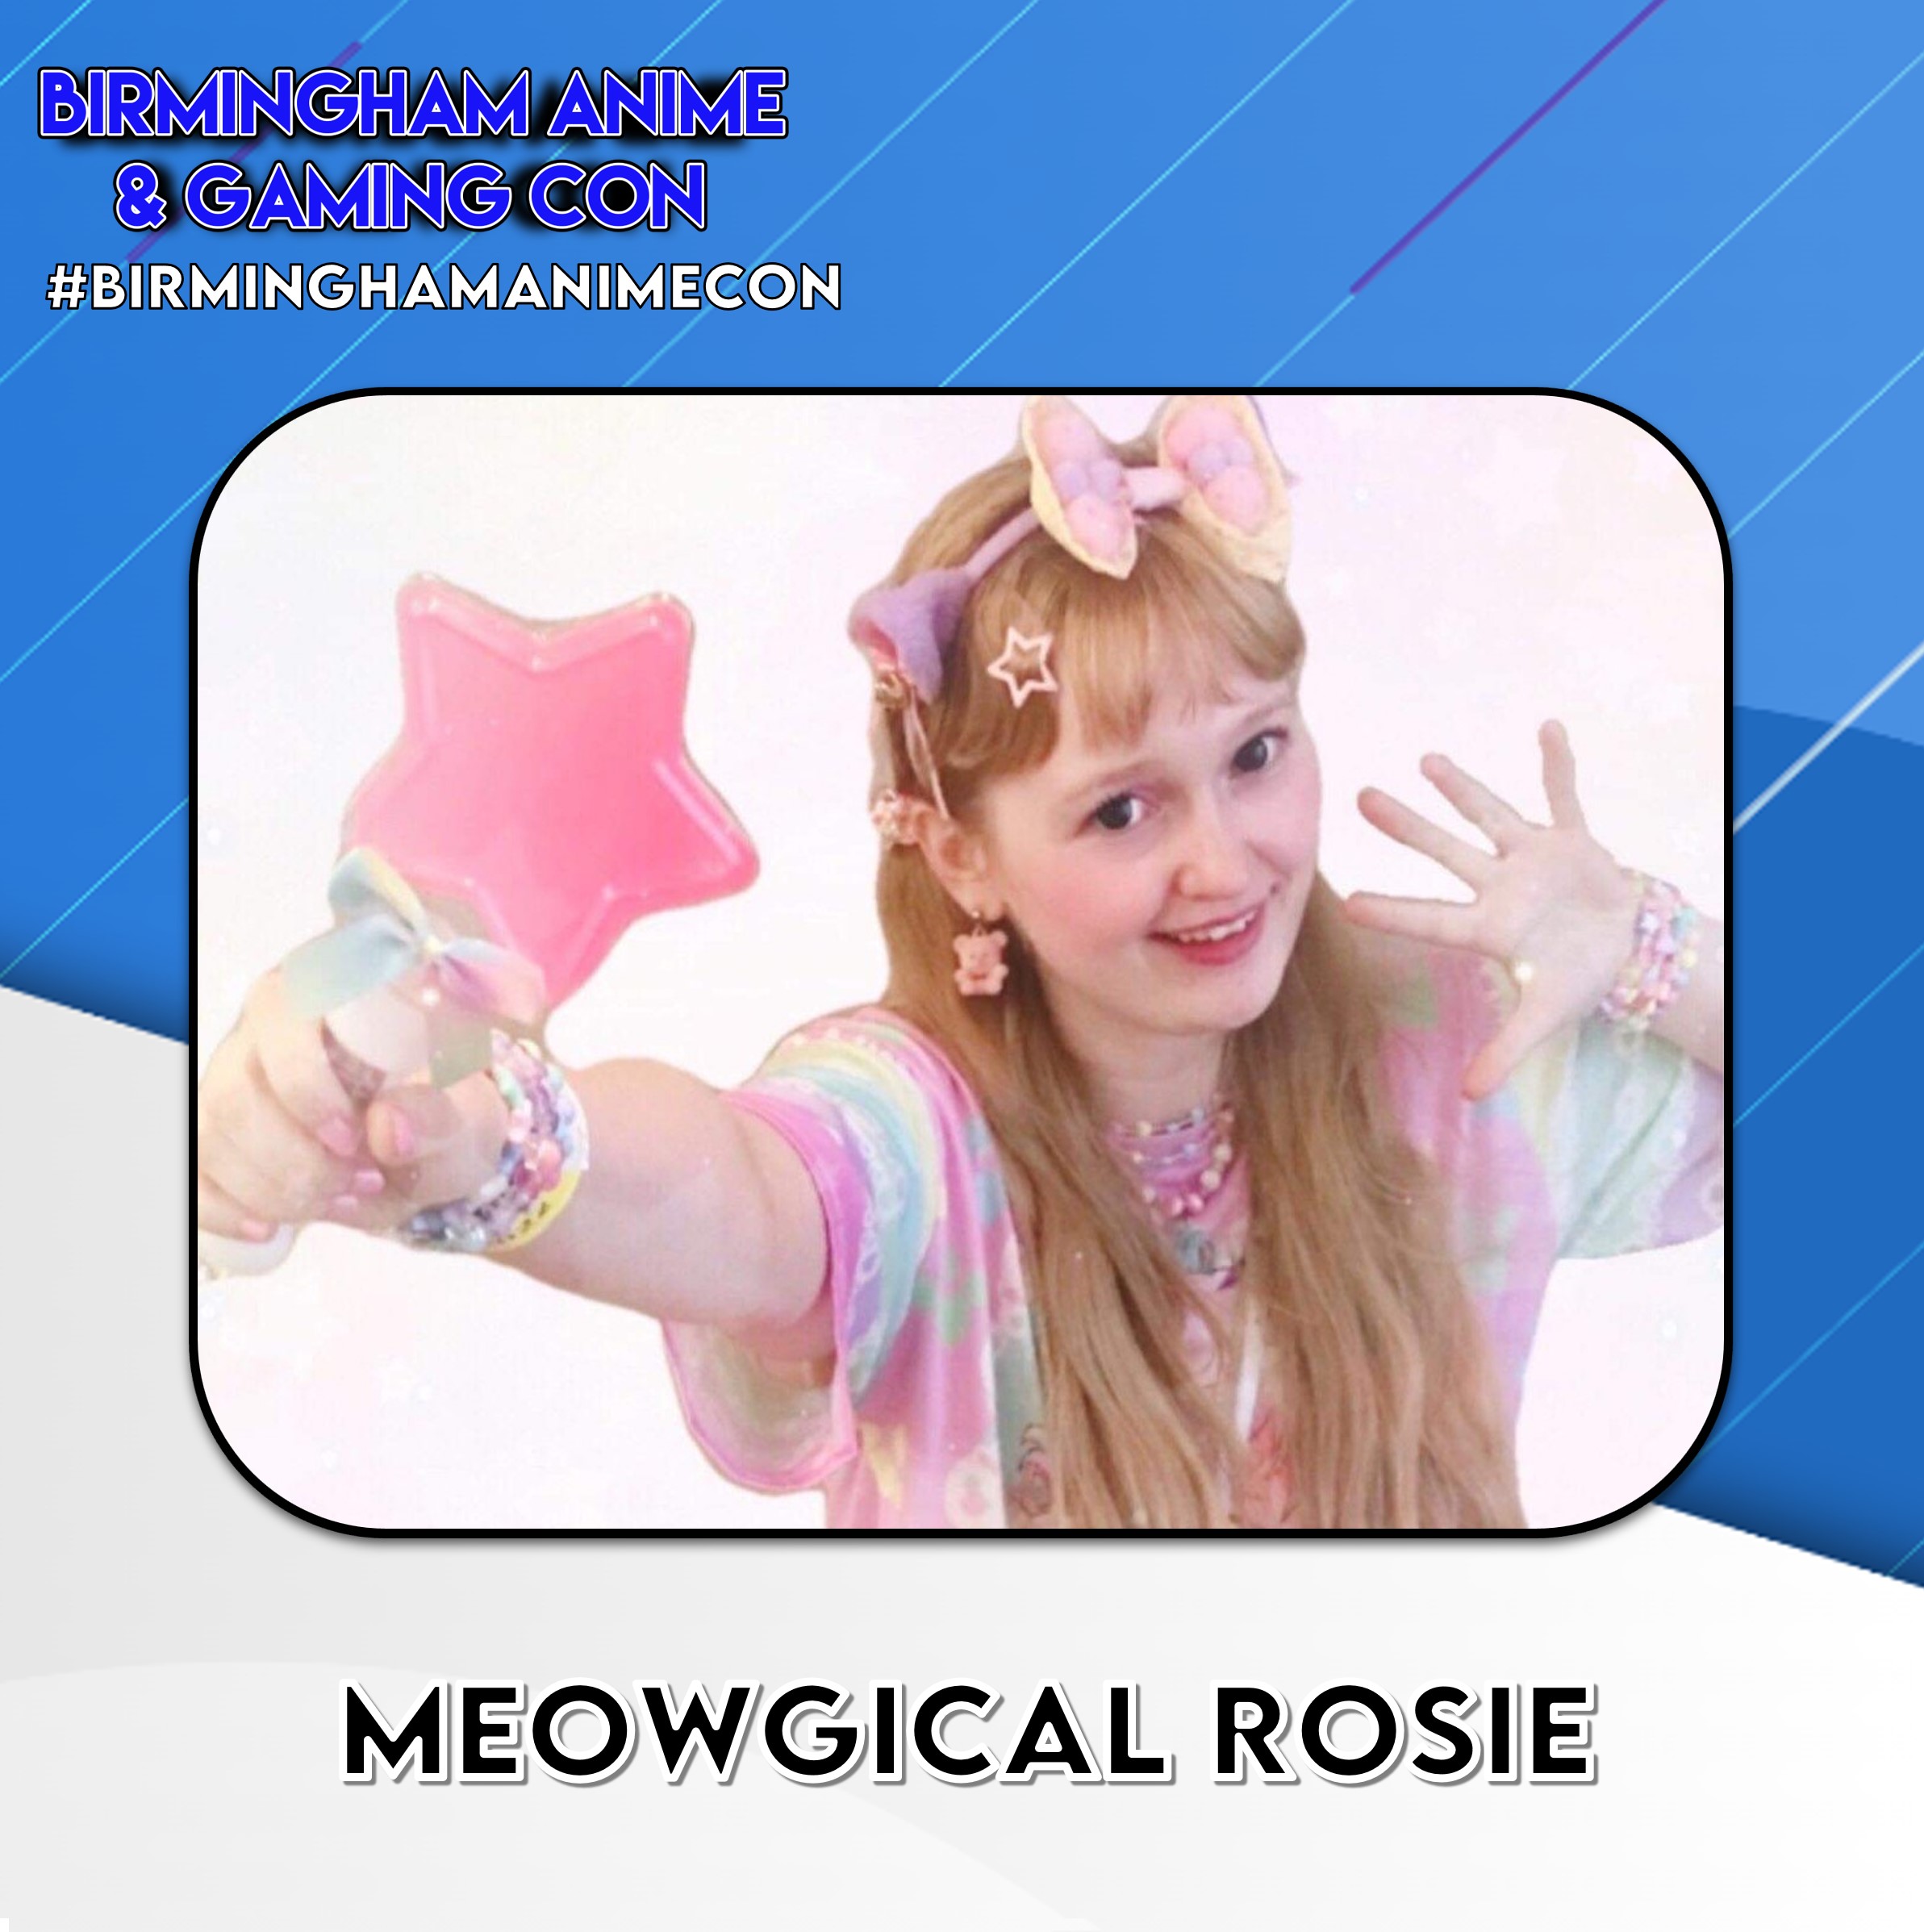 Meowgical Rosie